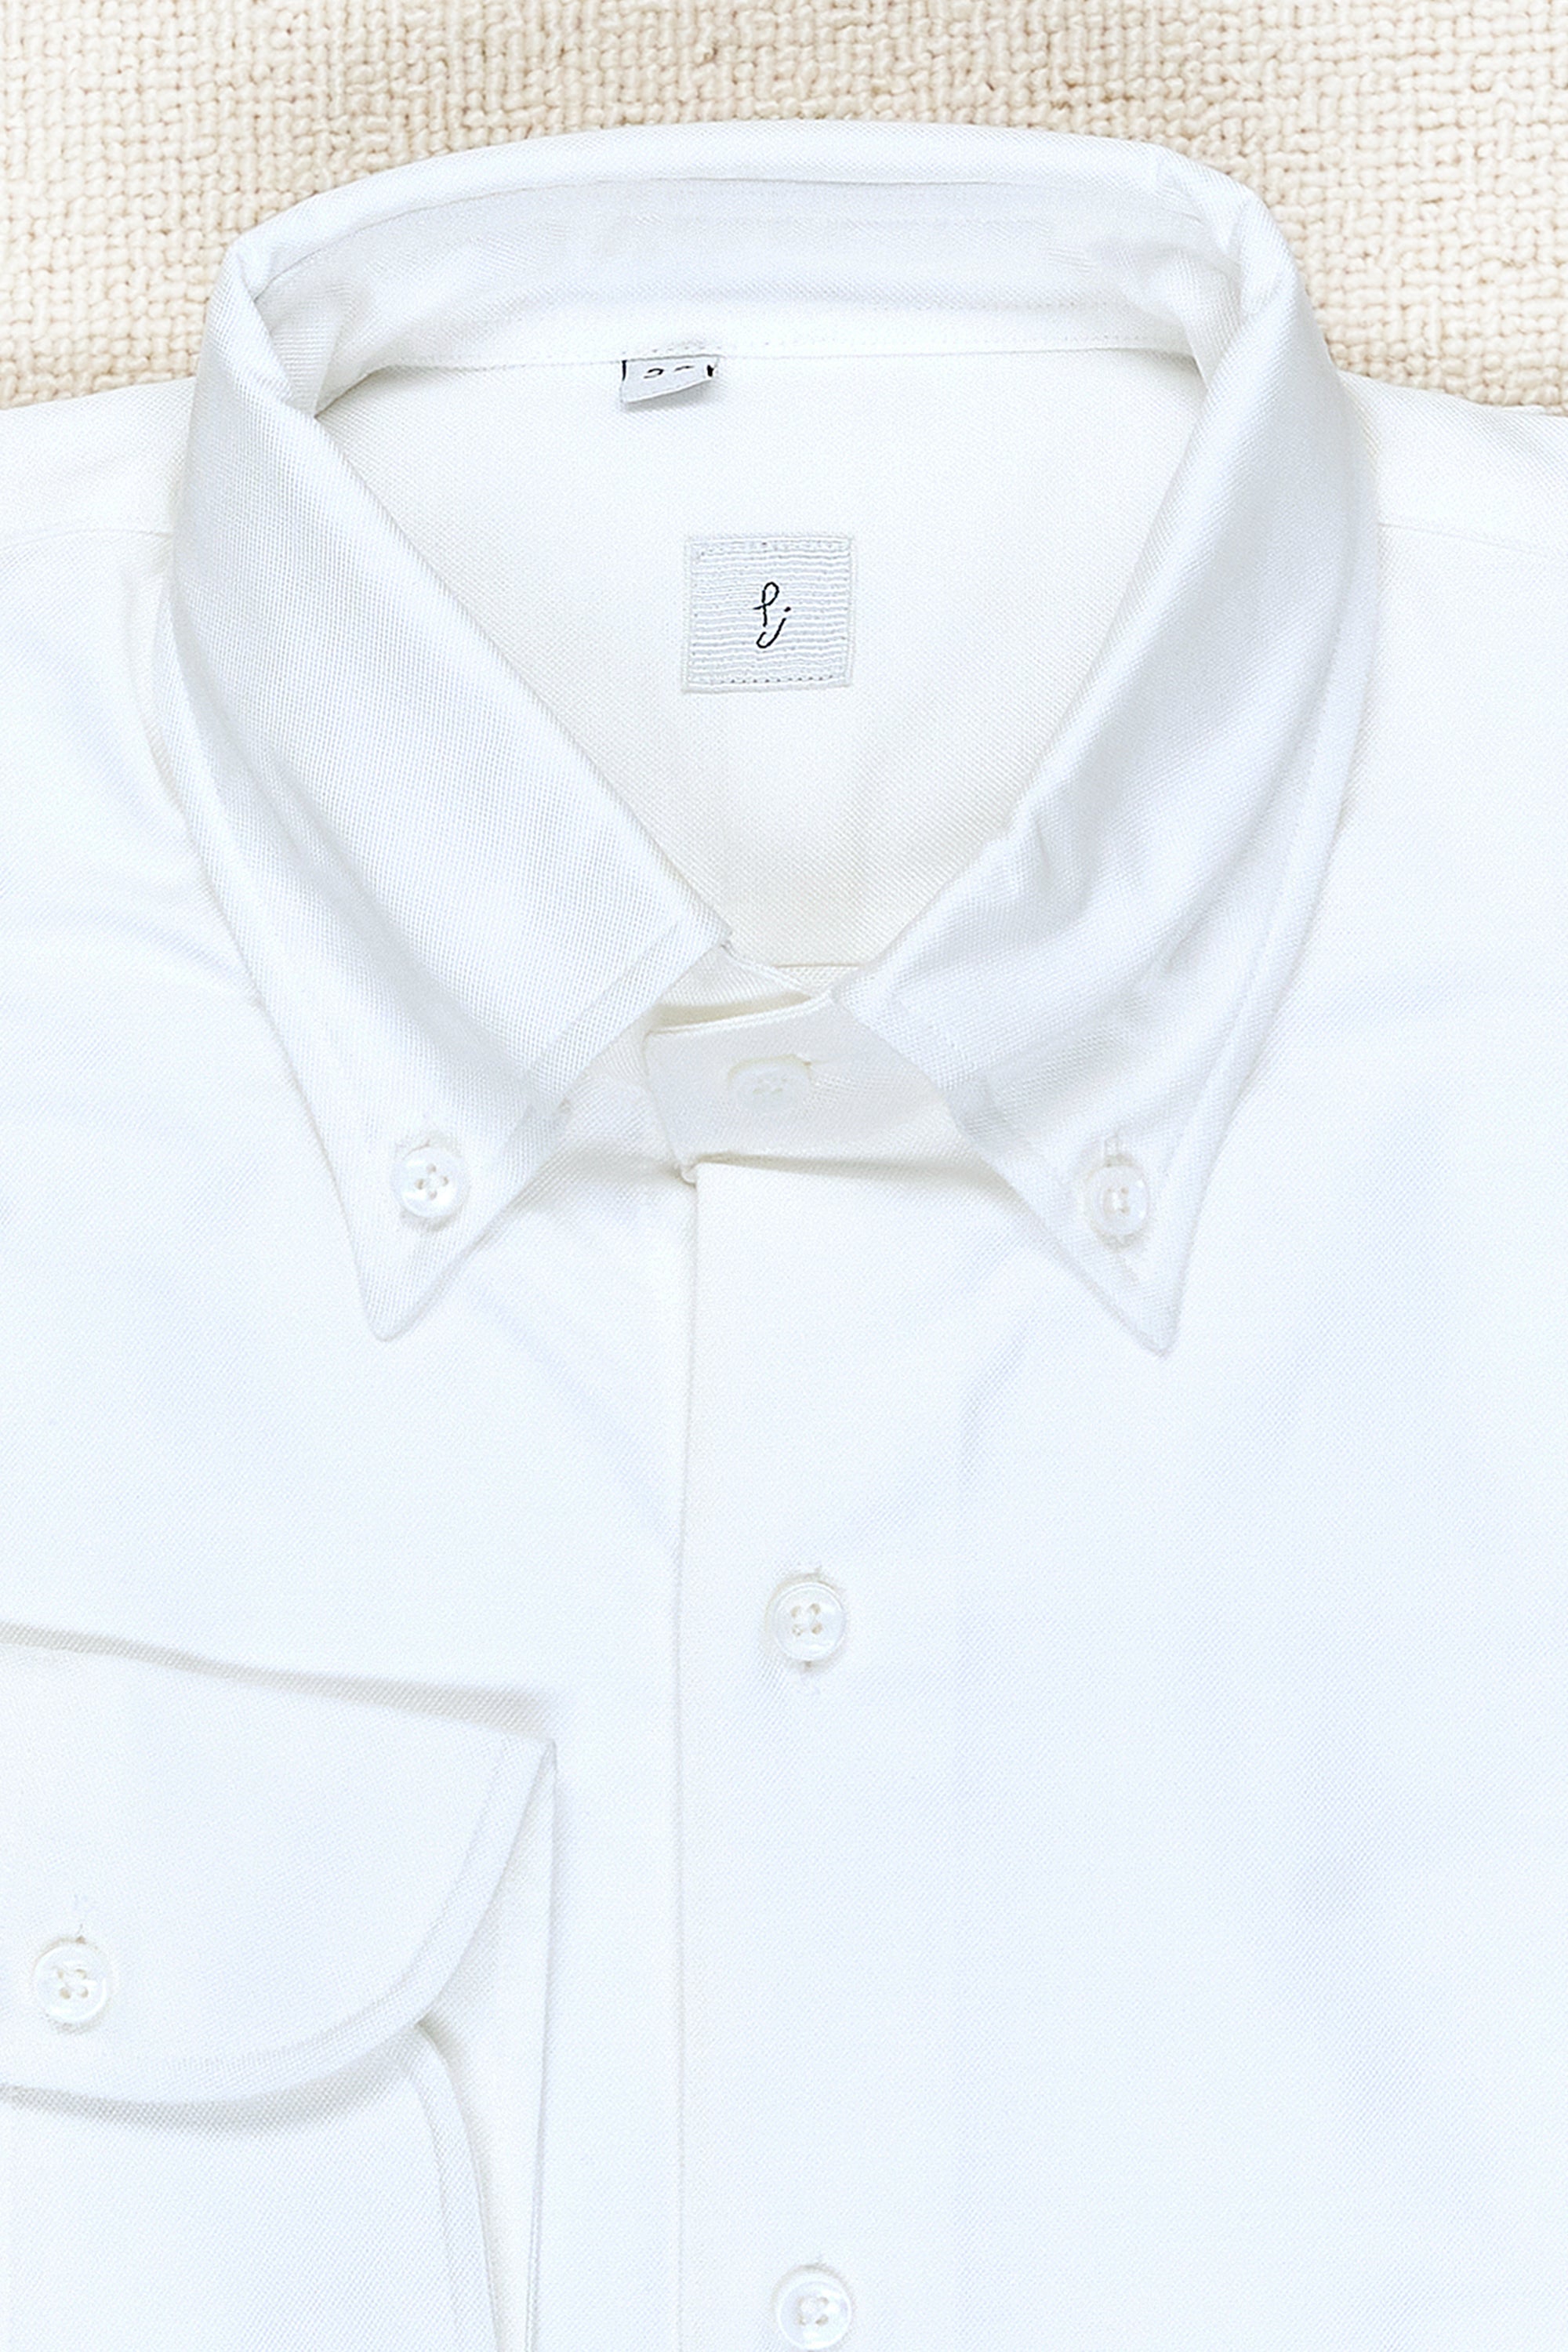 P. Johnson White Cotton Button Down Shirt